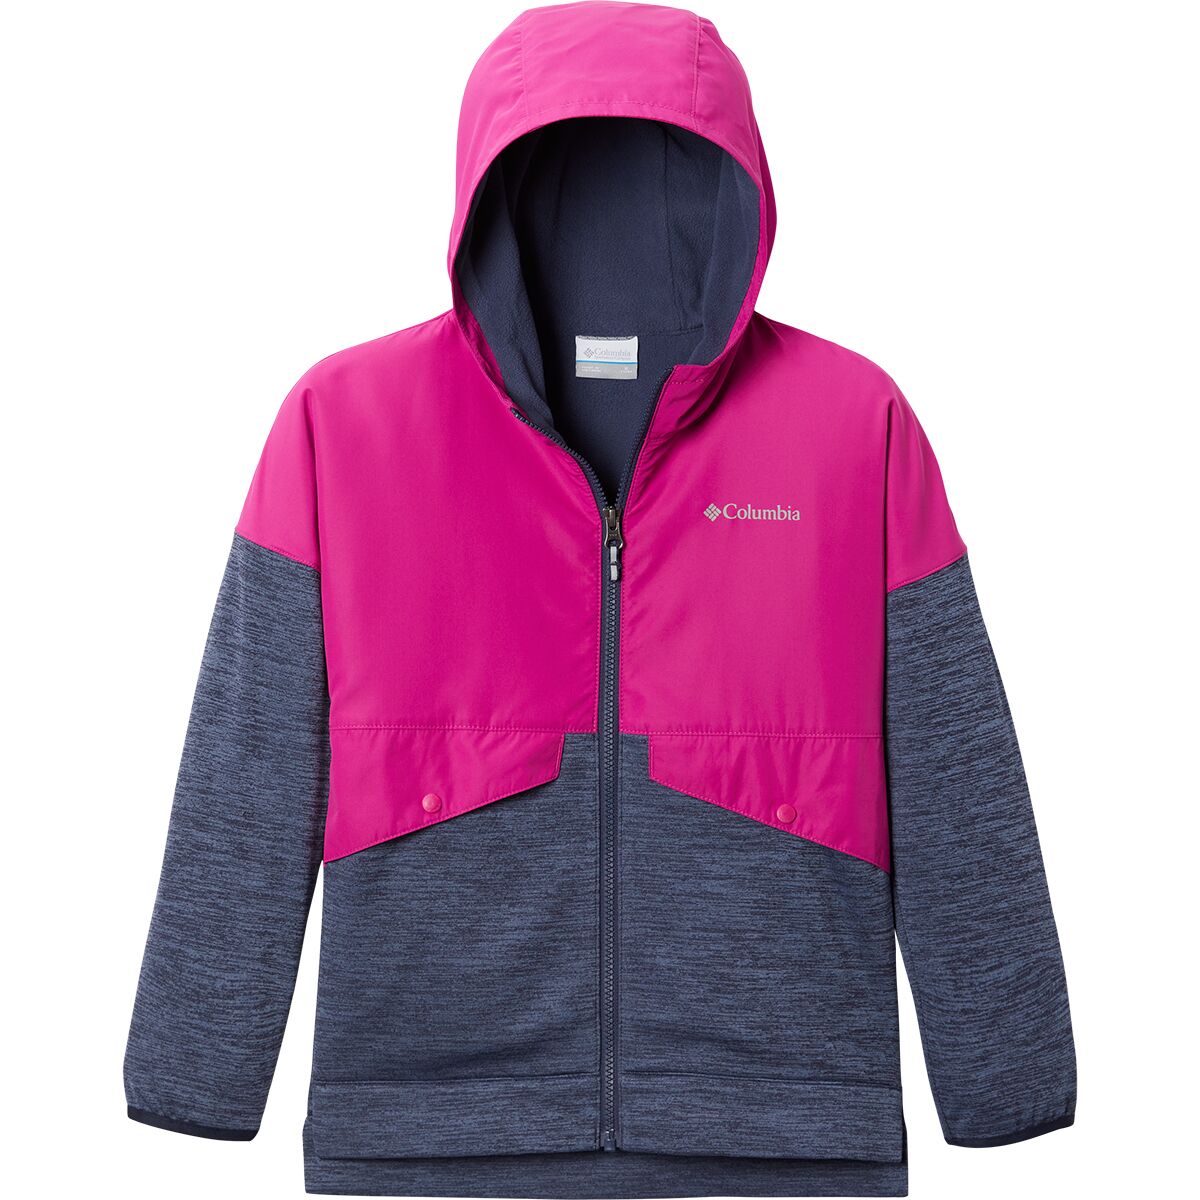 Columbia Out-Shield Dry Fleece Full-Zip Jacket - Girls'